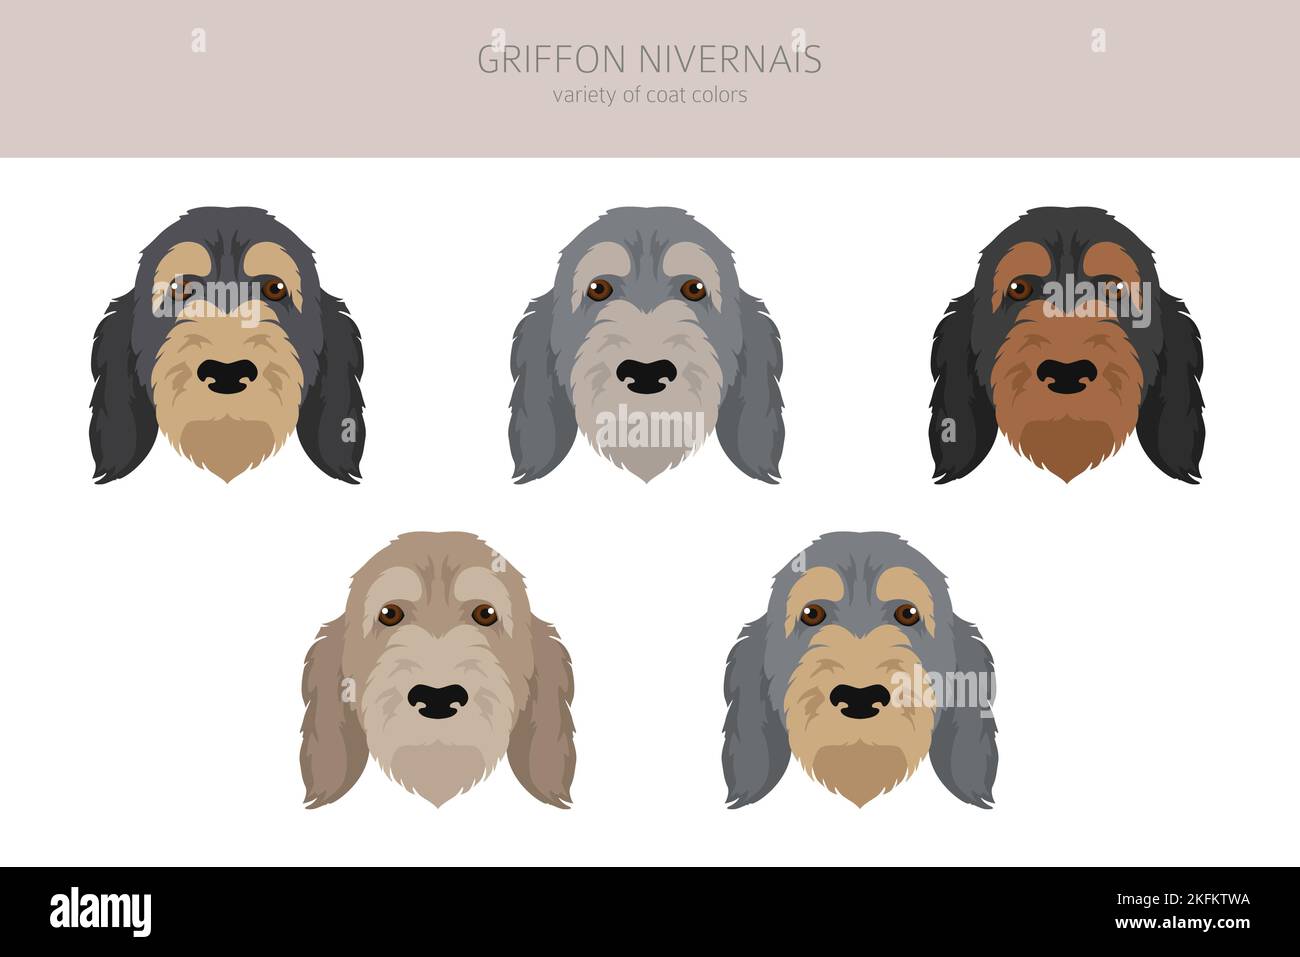 Griffon Nivernais clipart. Different coat colors set.  Vector illustration Stock Vector